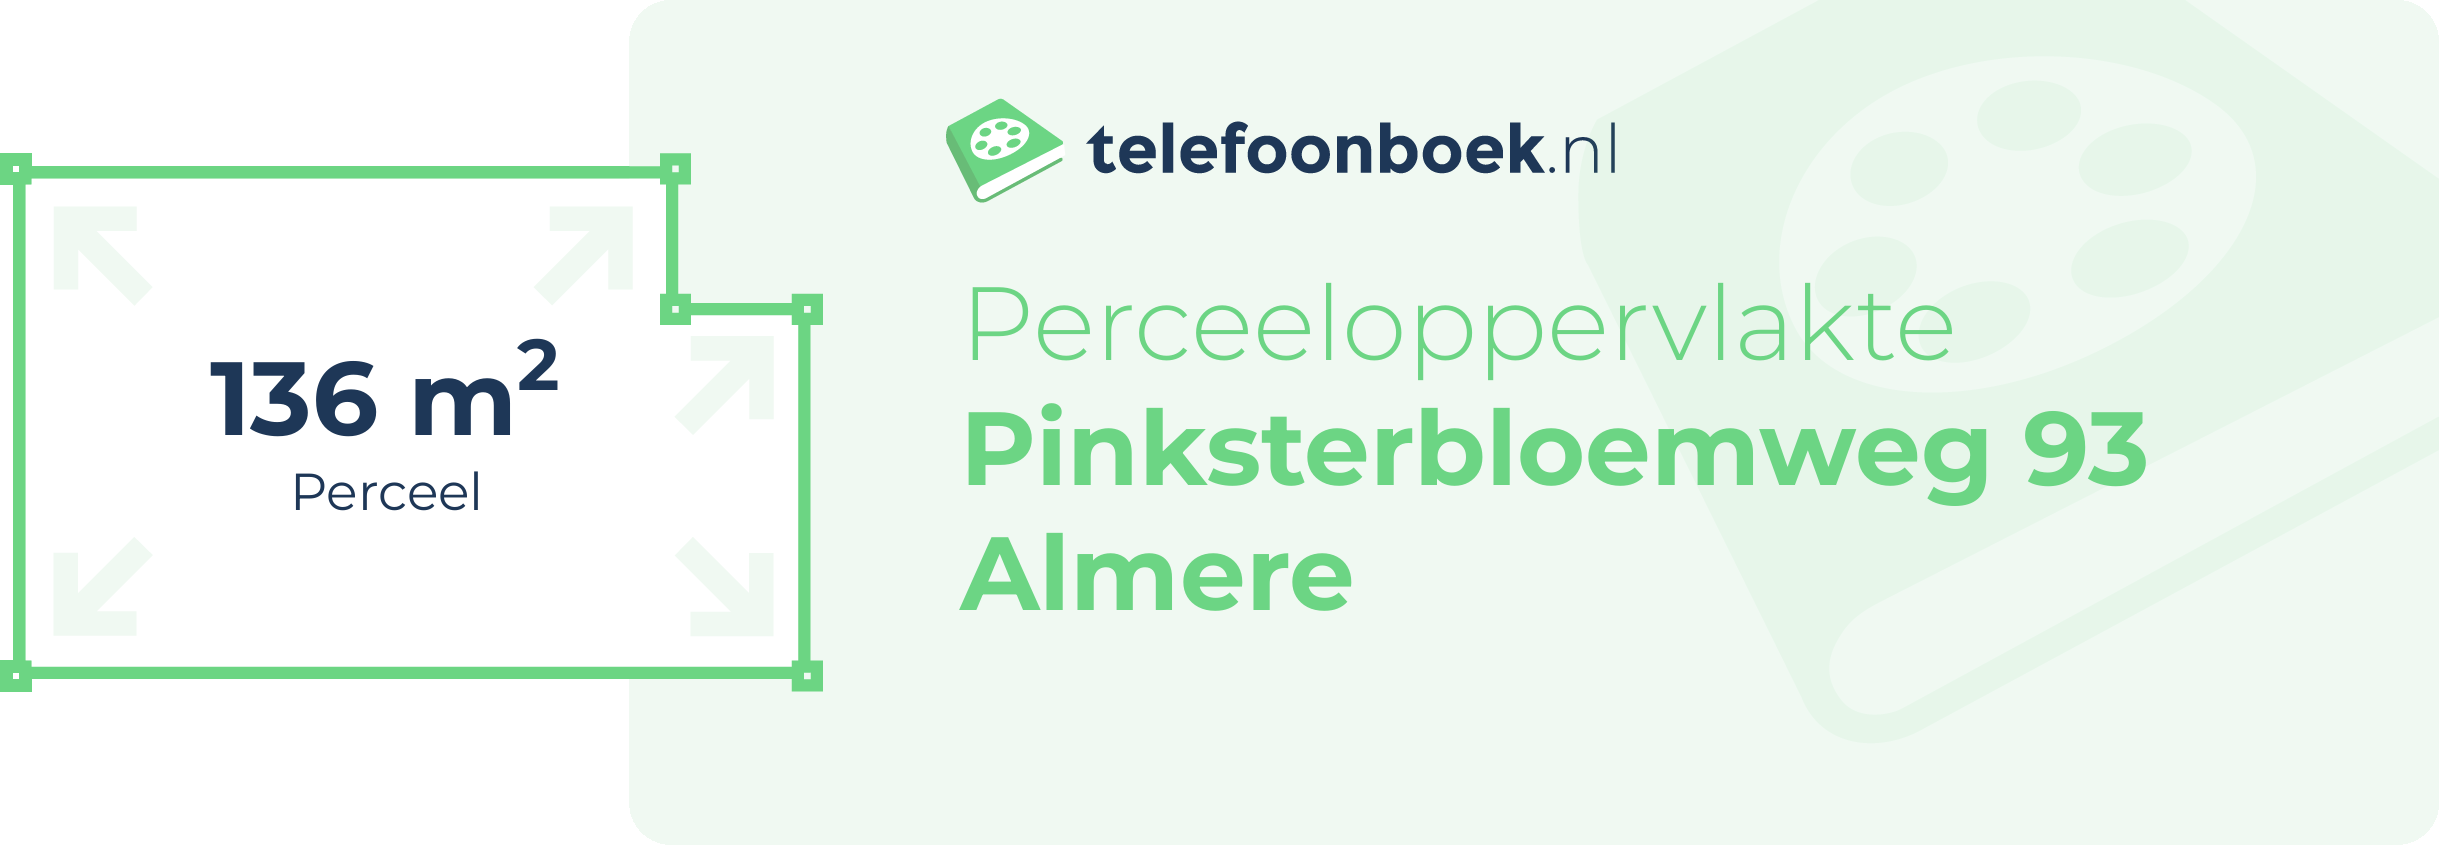 Perceeloppervlakte Pinksterbloemweg 93 Almere